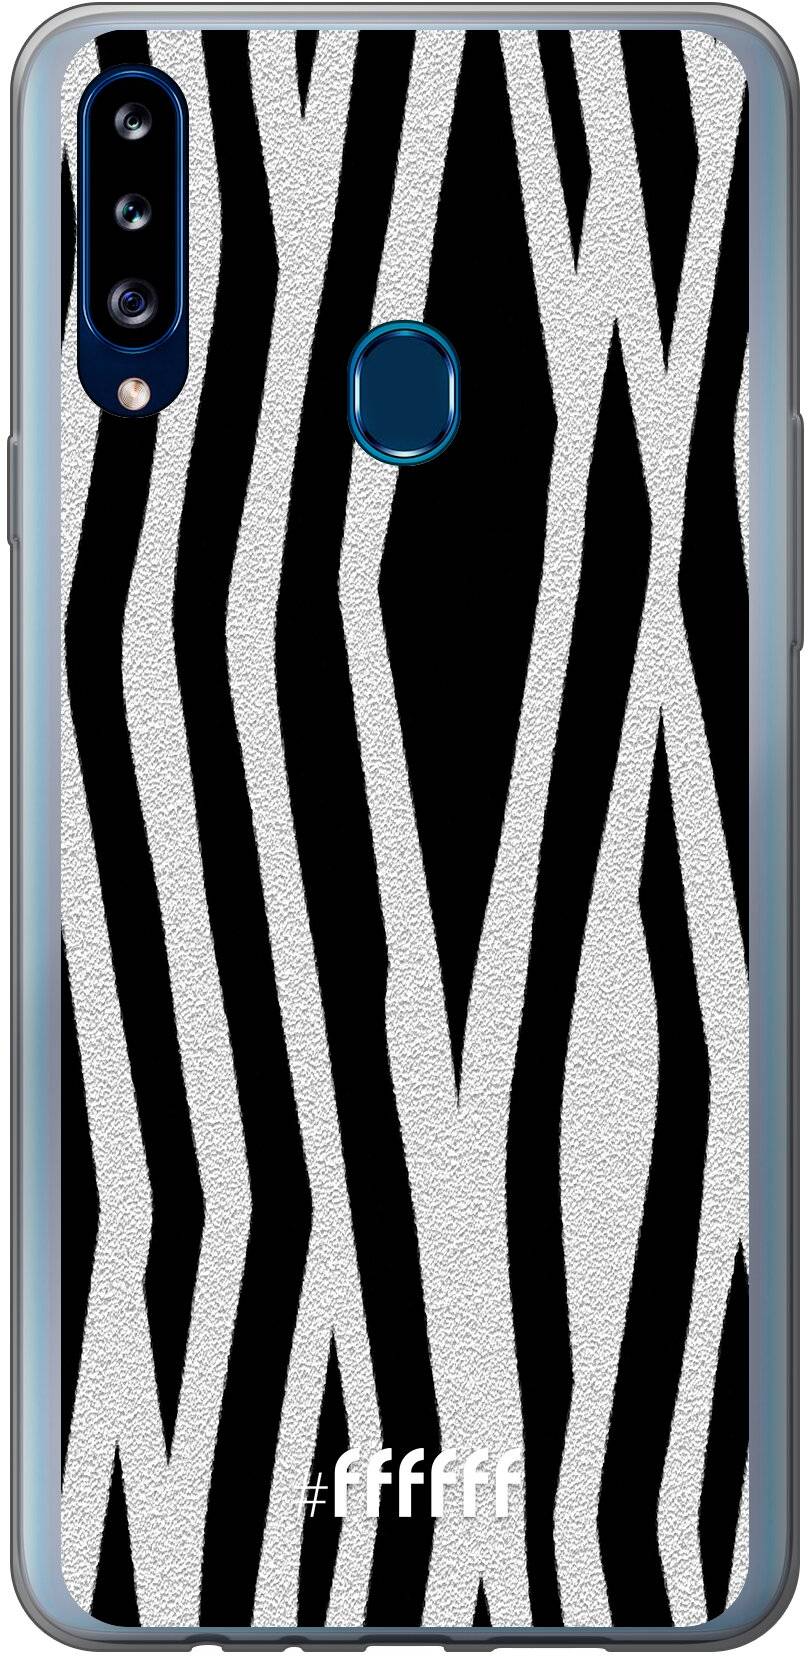 Zebra Print Galaxy A20s